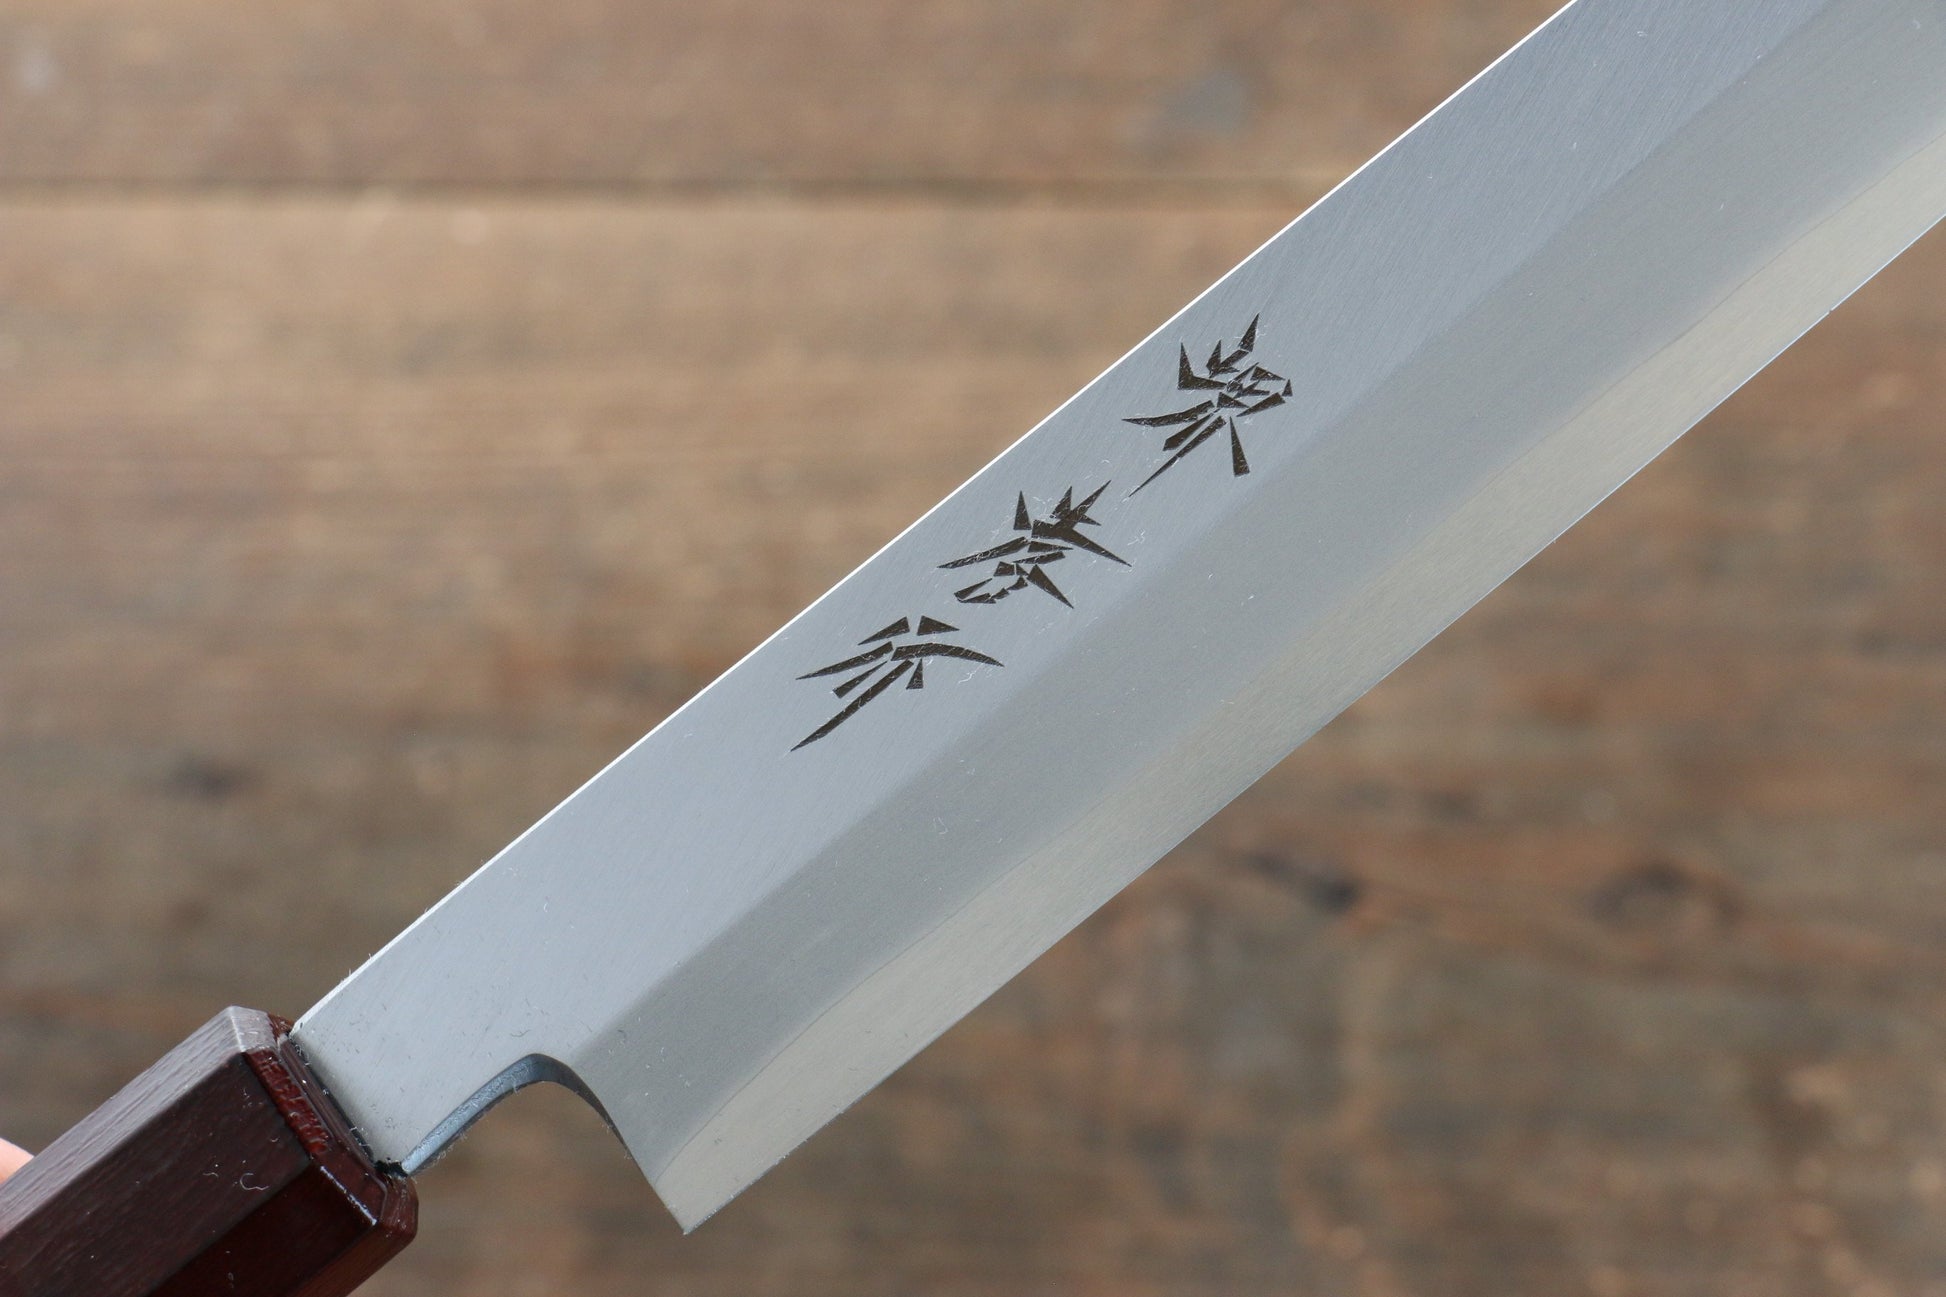 Sakai Takayuki Sakai Takayuki Nanairo INOX Molybdenum Yanagiba Japanese Knife 270mm with ABS resin(Tortoiseshell) Handle - Japanny - Best Japanese Knife